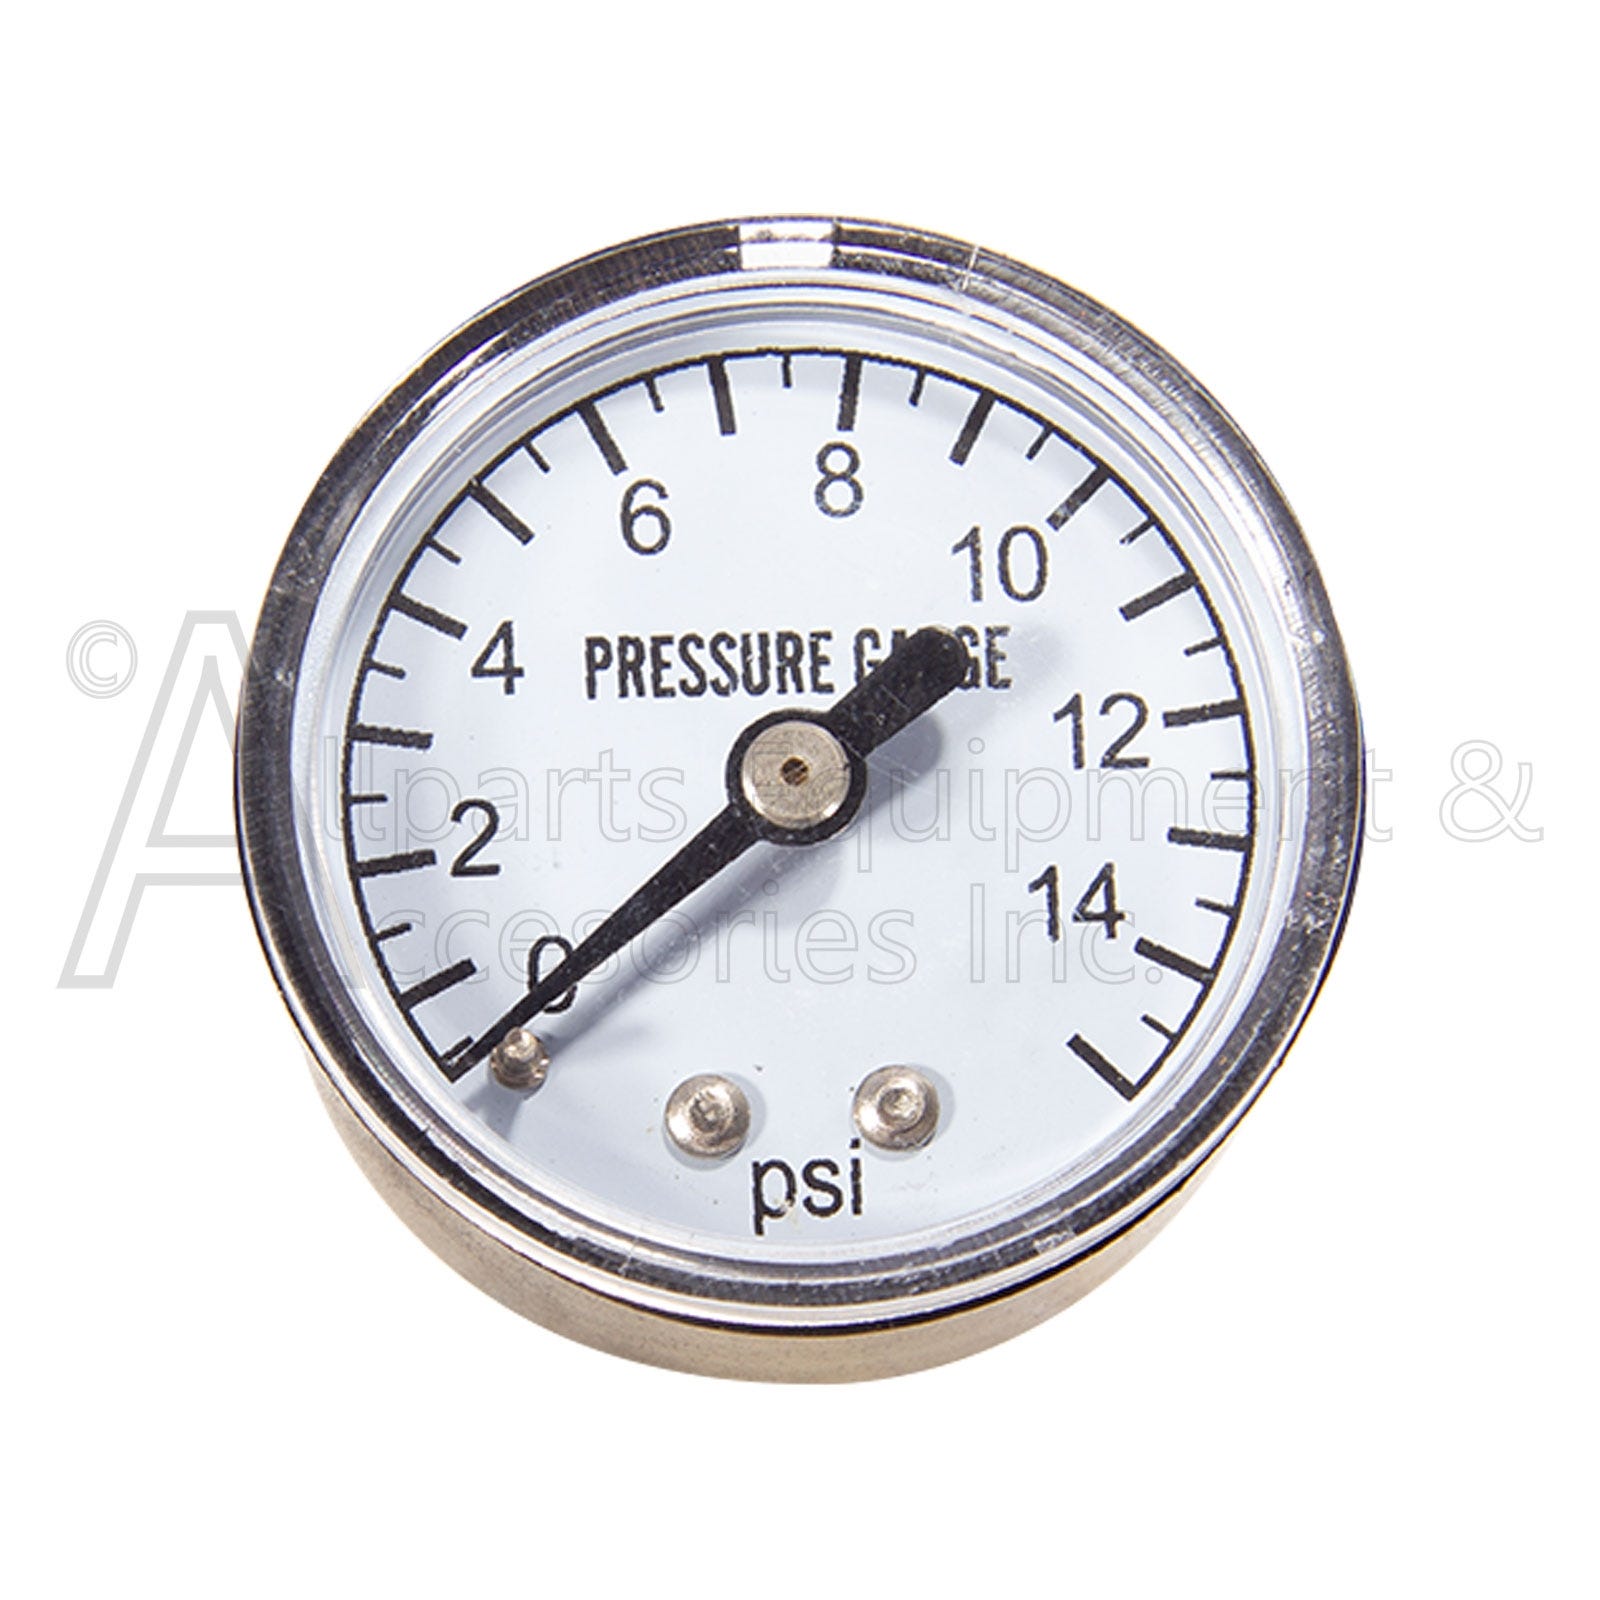 3740-0049-00 Pressure Gauge for Portable Heater